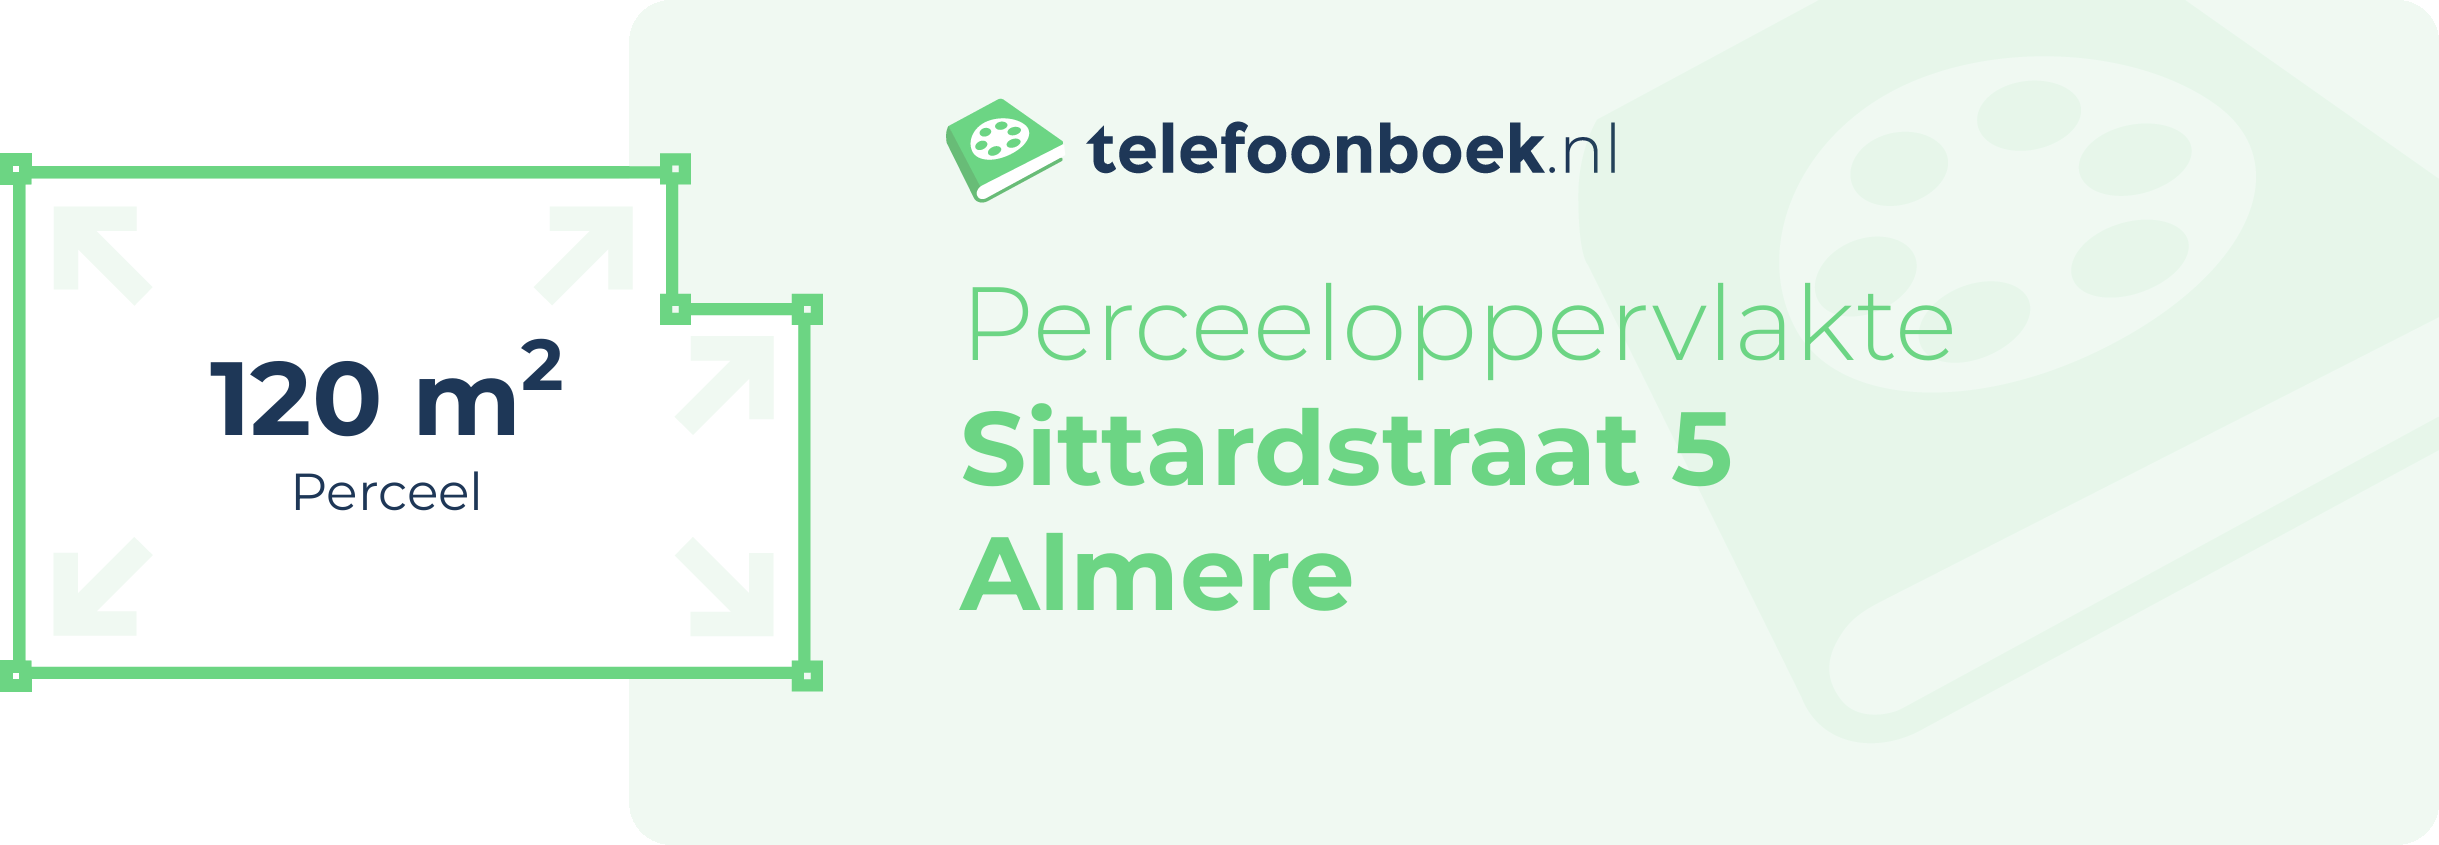 Perceeloppervlakte Sittardstraat 5 Almere